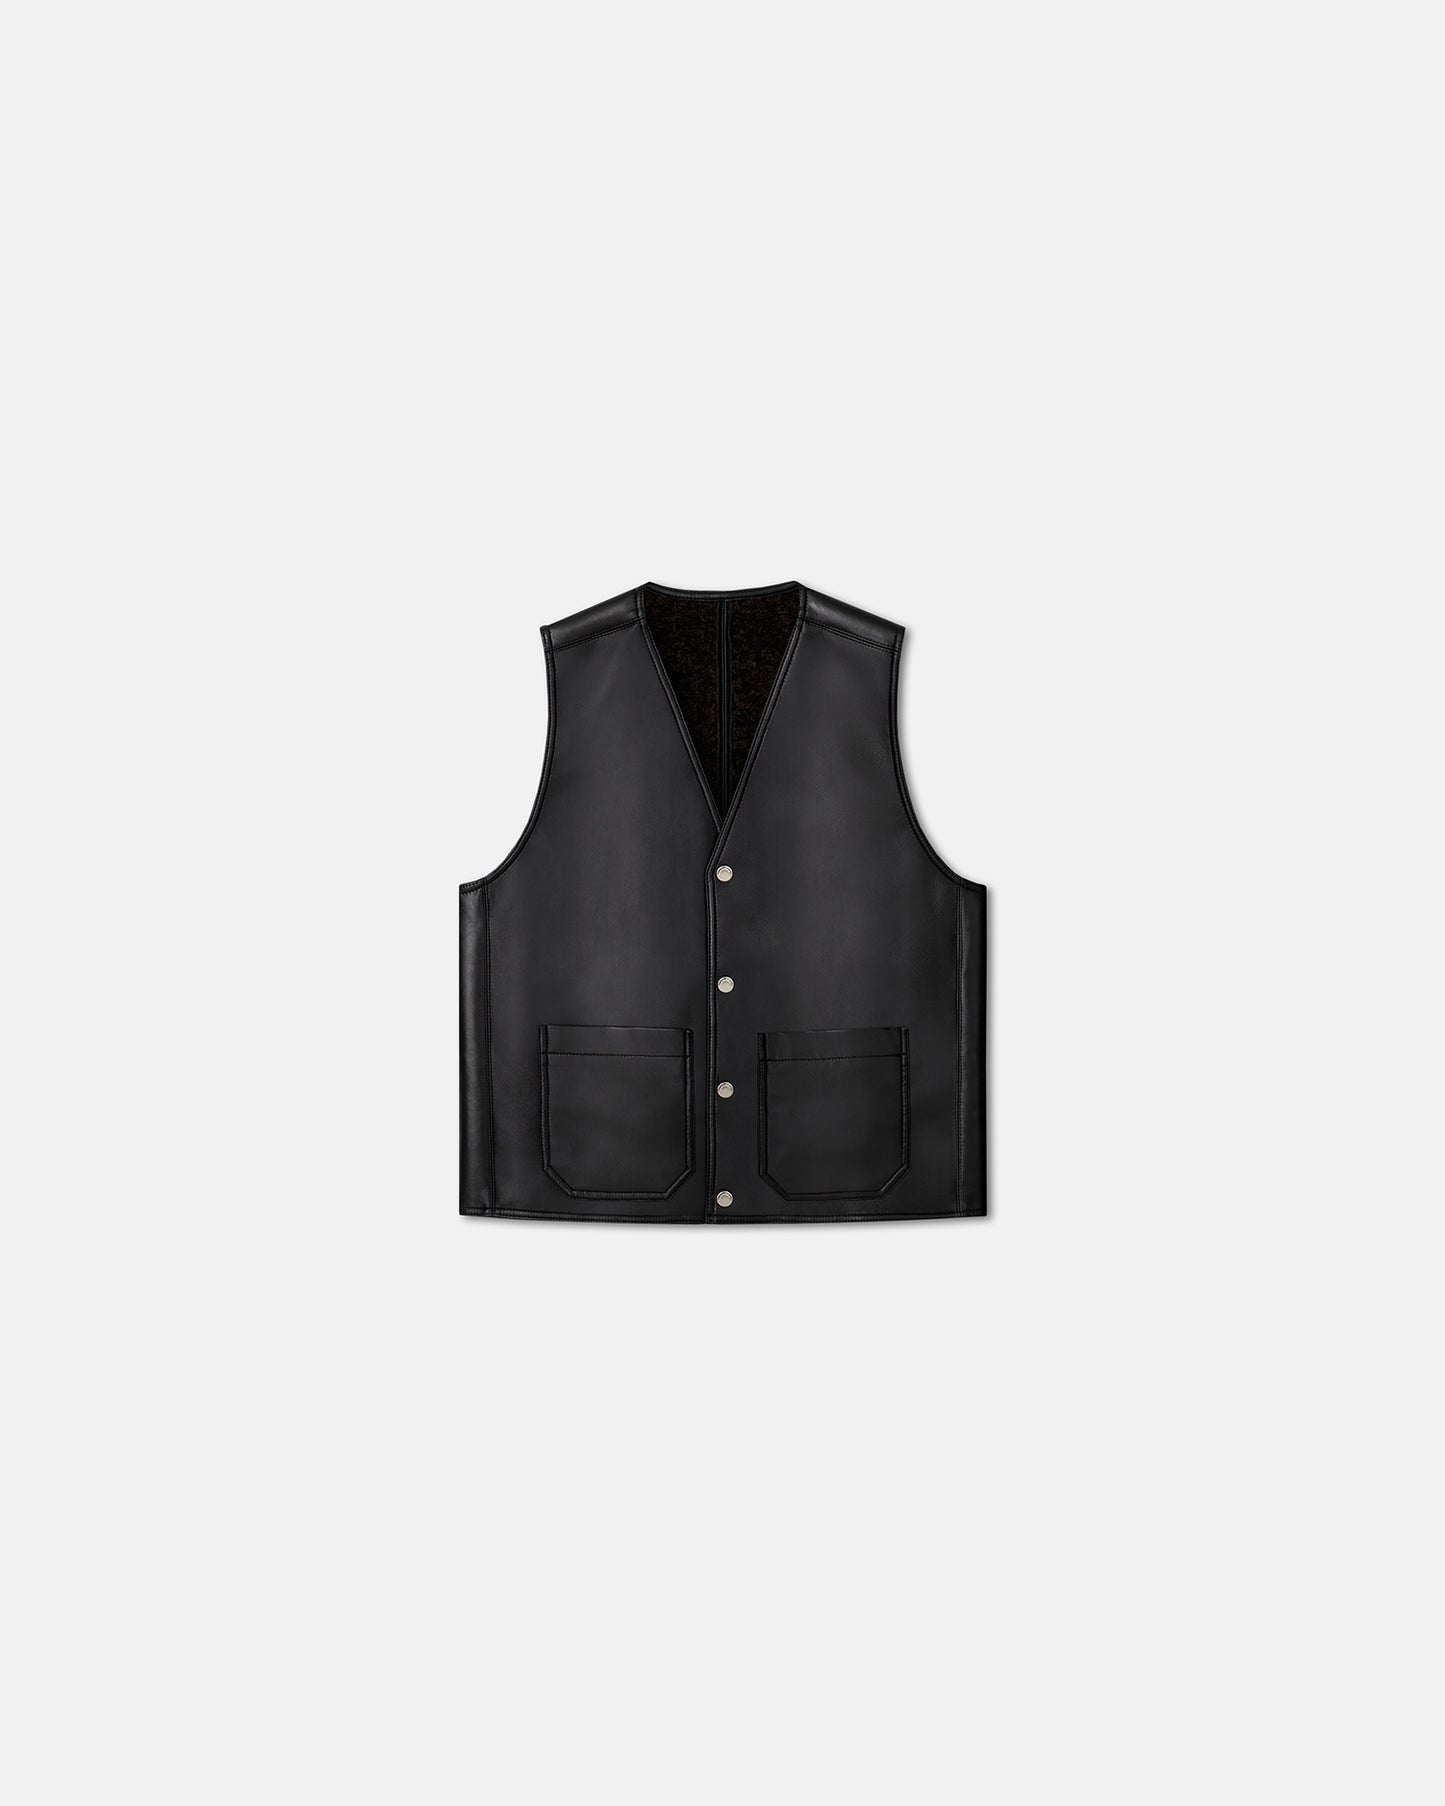 Luben - Regenerated Leather Vest - Black Brown